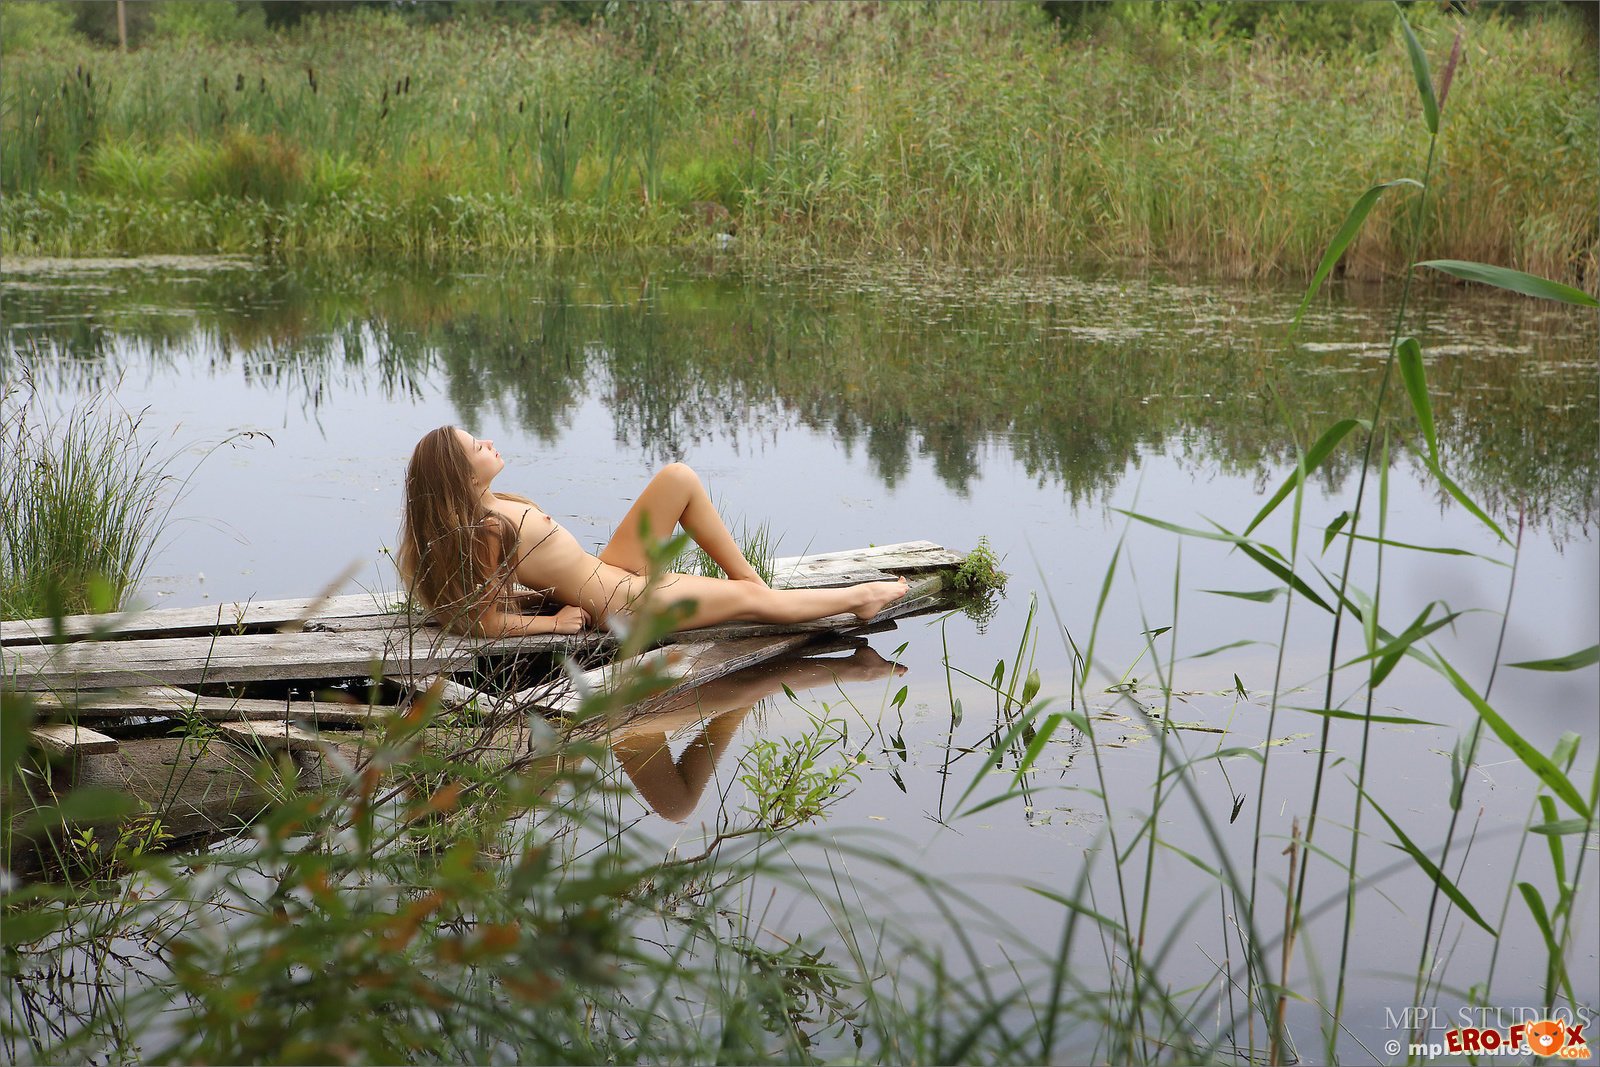 Голая русская девушка на берегу речки